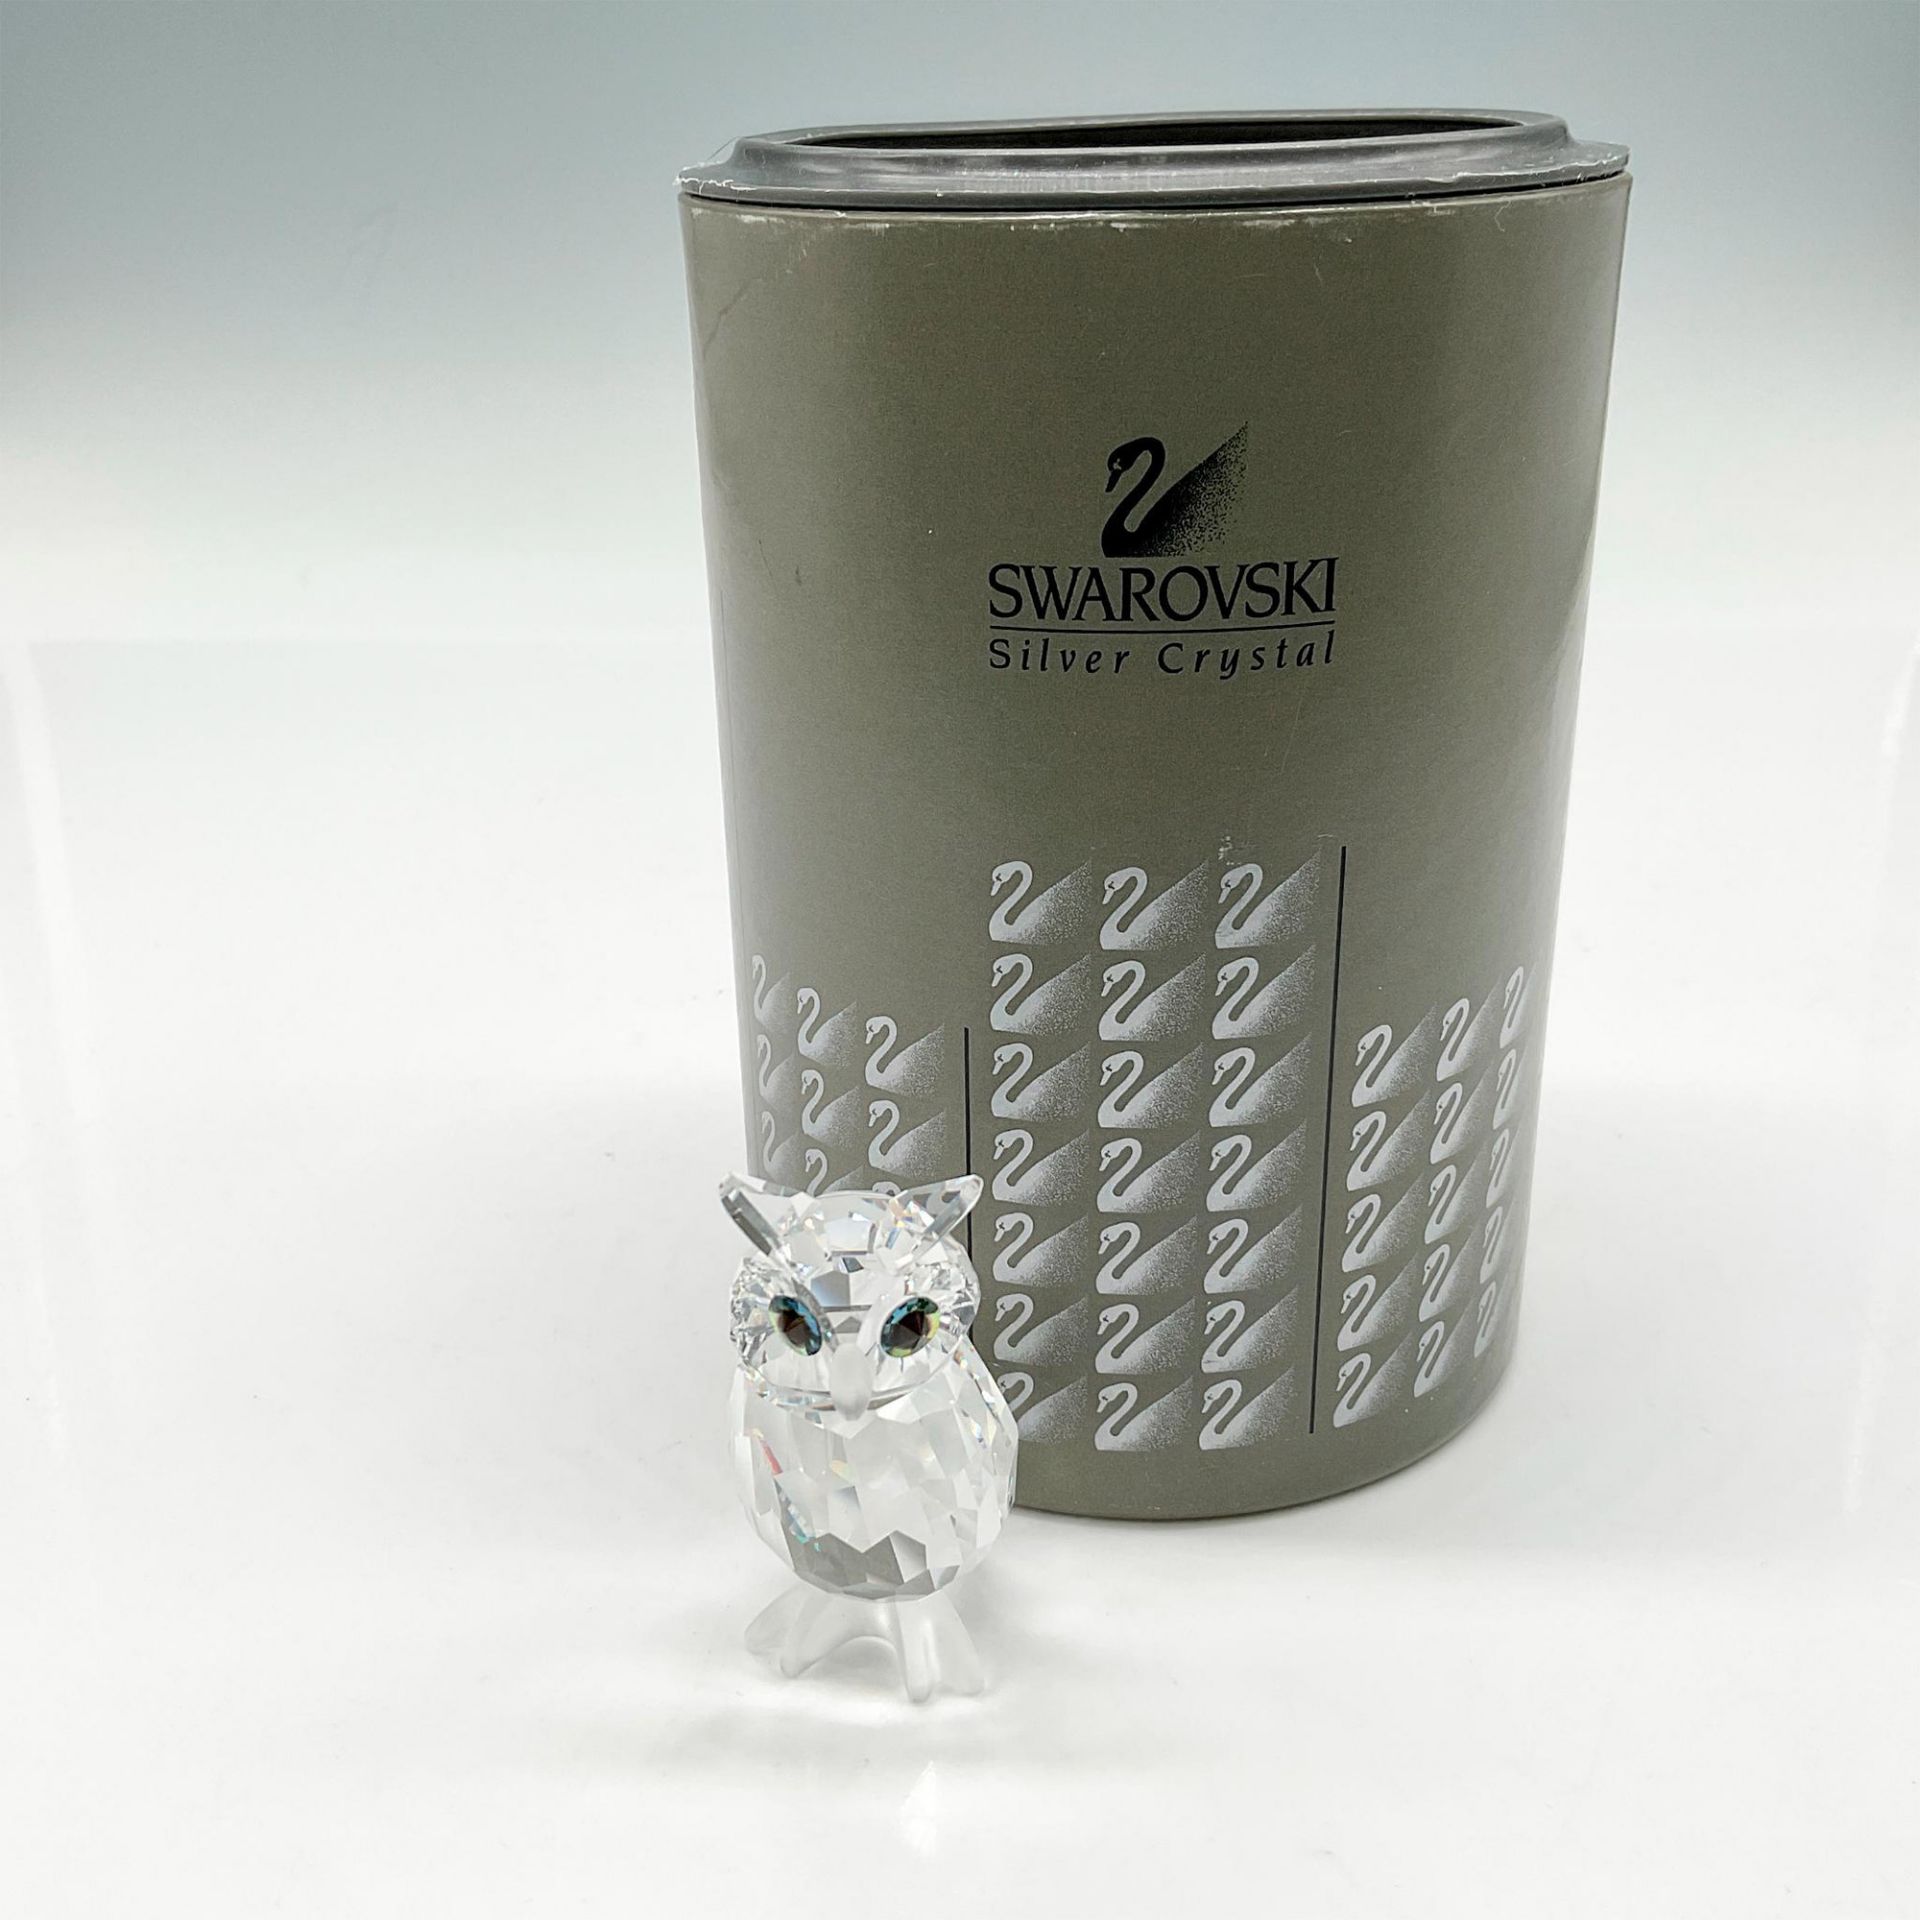 Swarovski Silver Crystal Figurine, Night Owl - Image 4 of 4